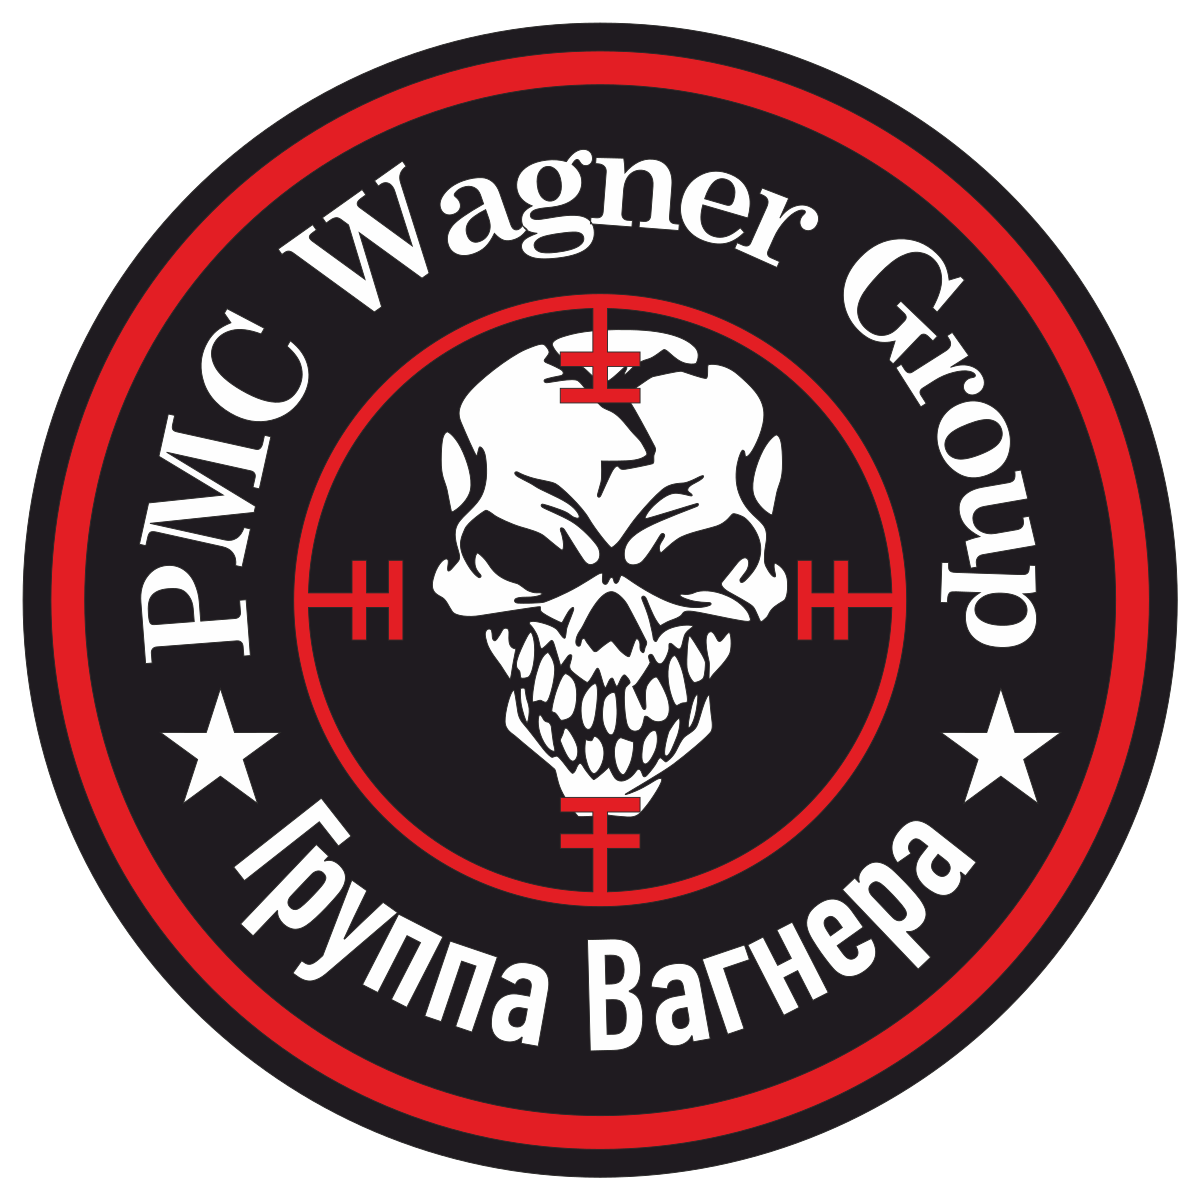 Pmc wagner group logo.svg 